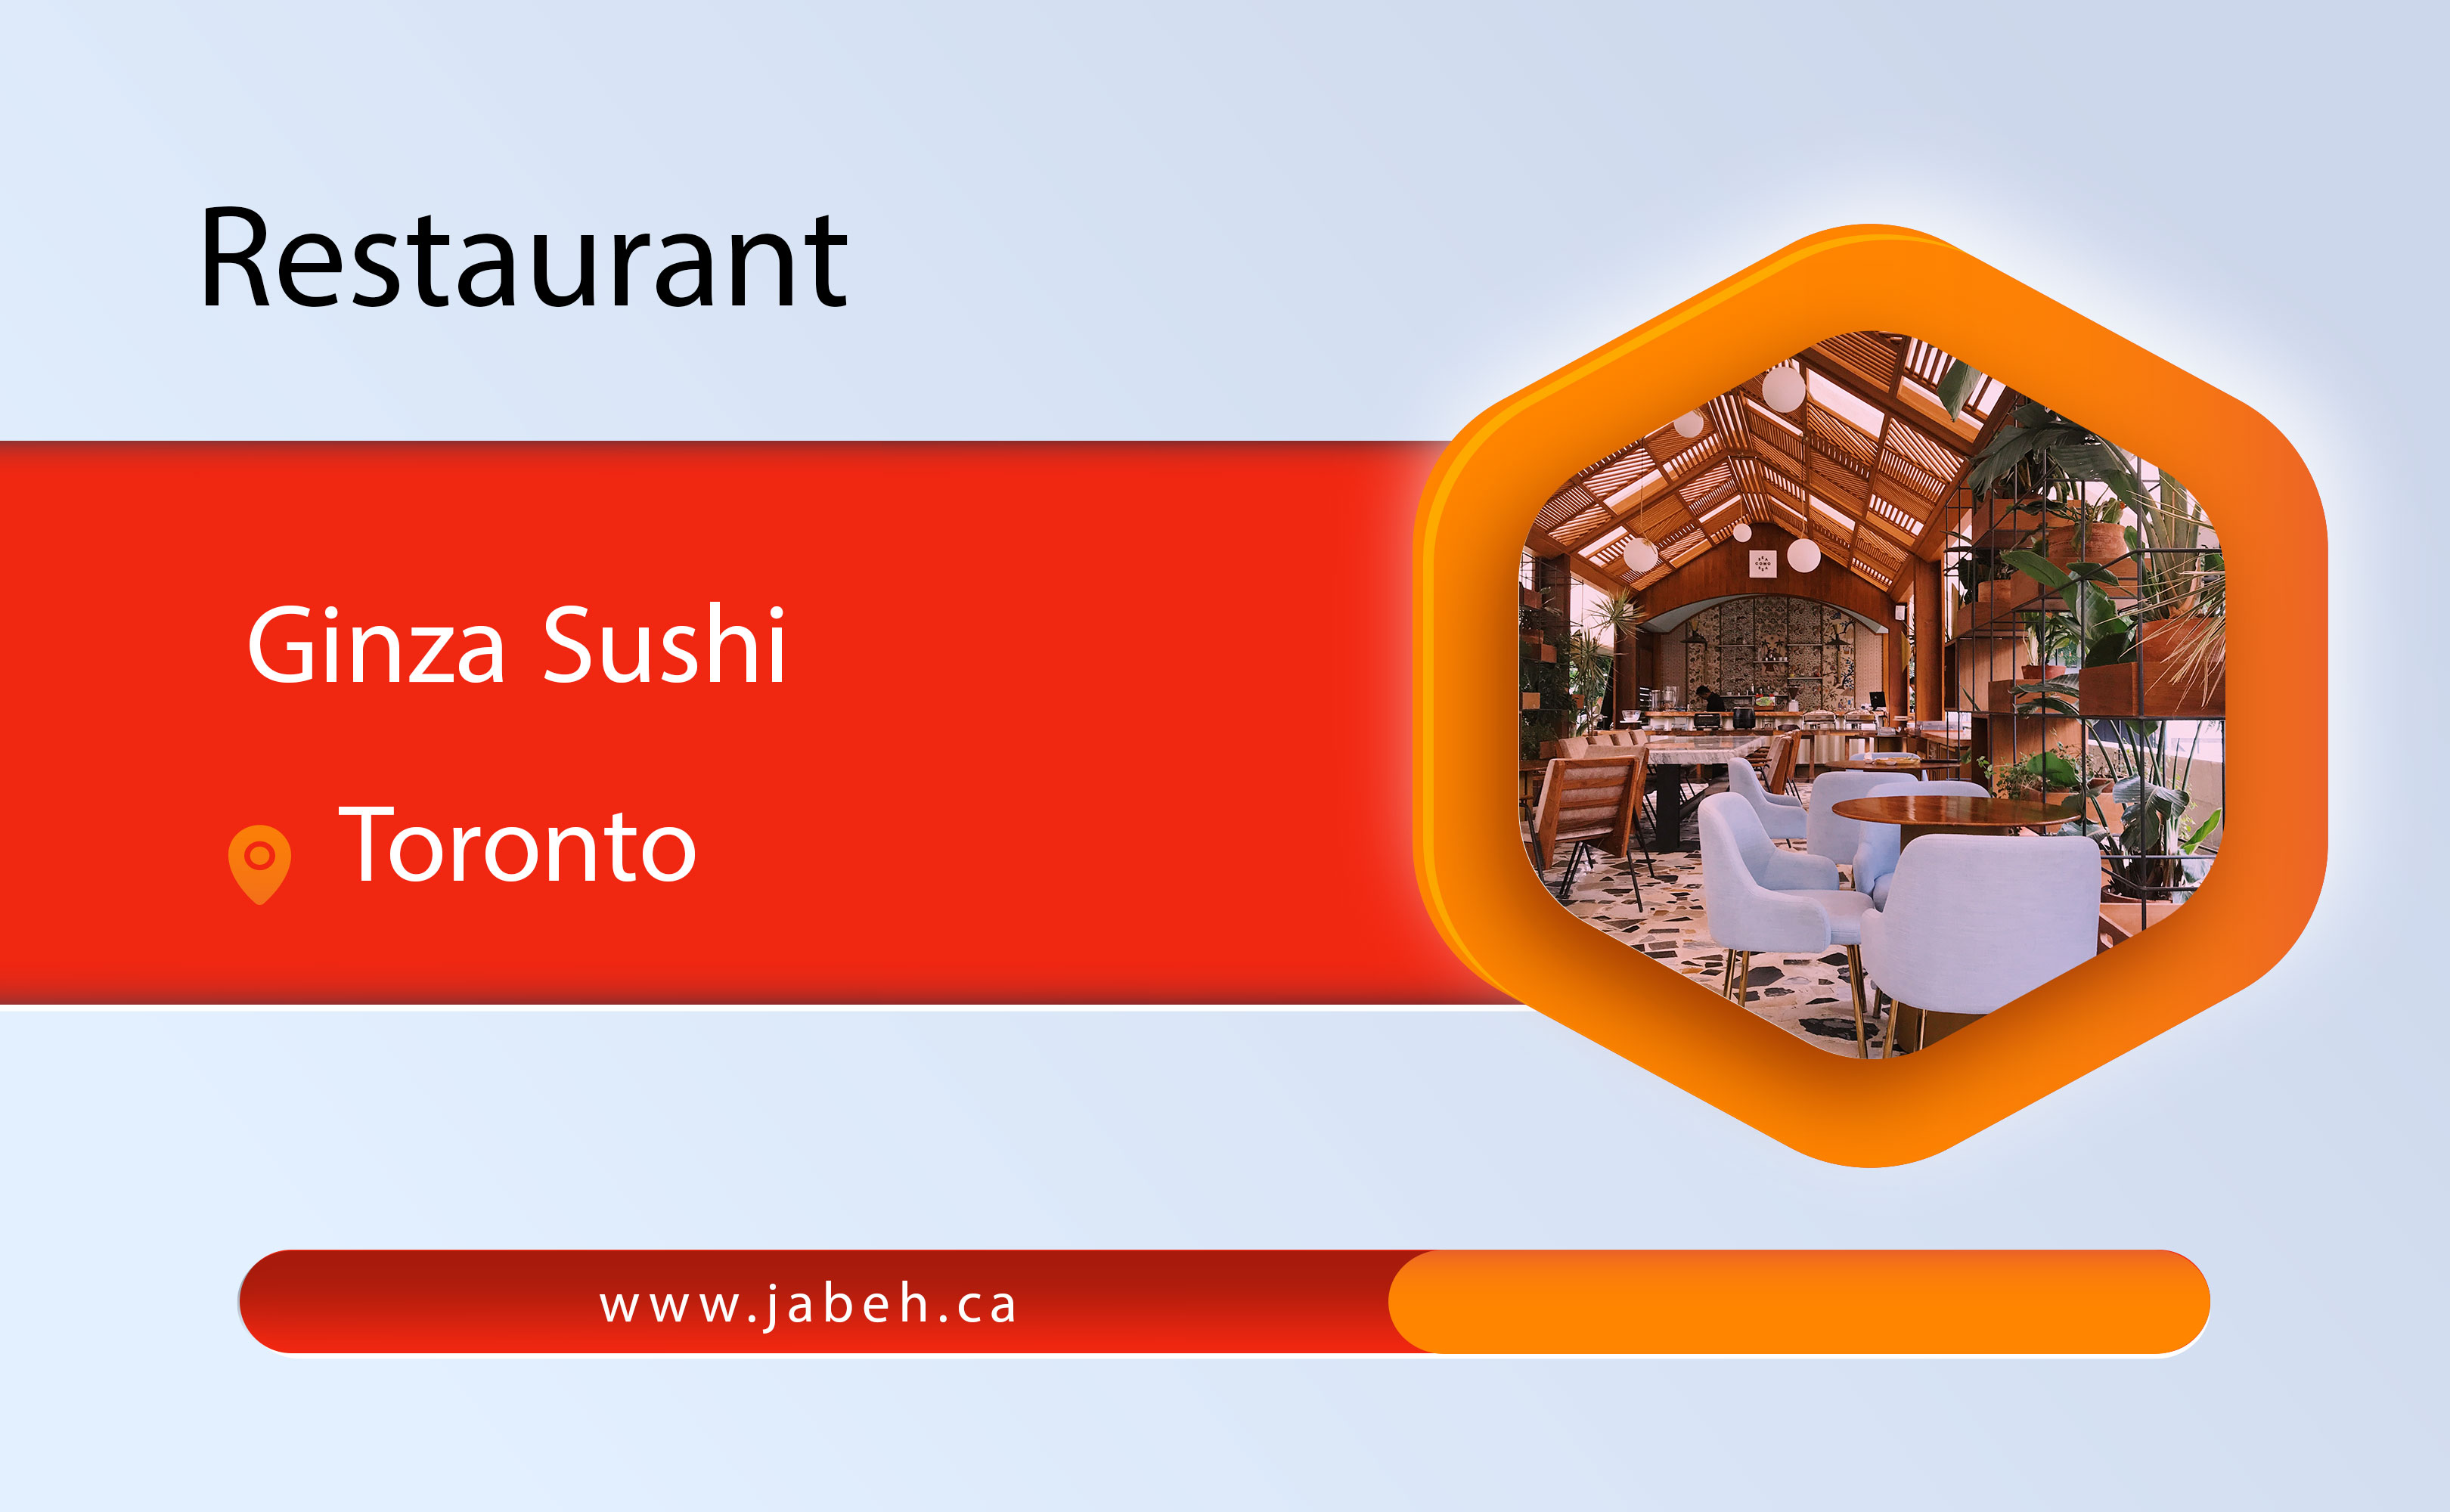 Ginza Sushi Restaurant in Toronto